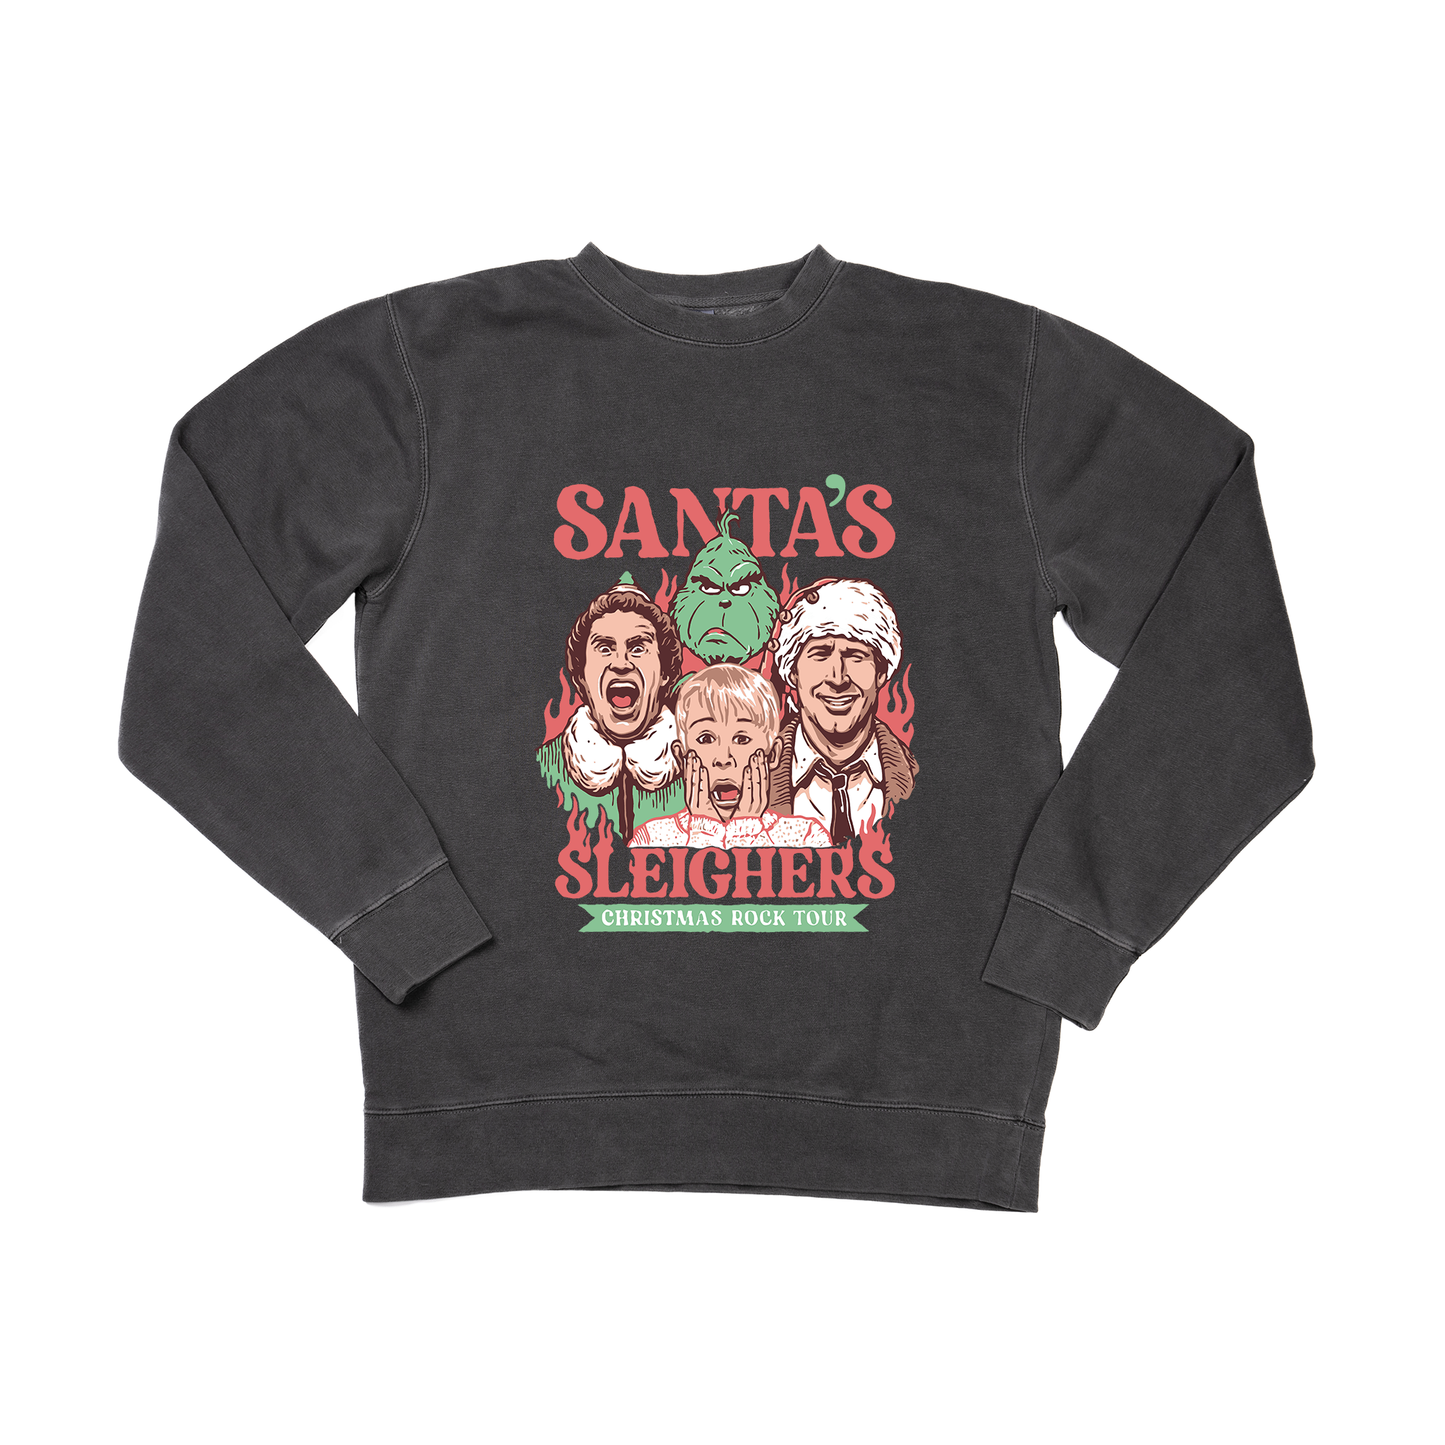 Santa's Sleighers (Graphic) - Sweatshirt (Charcoal)